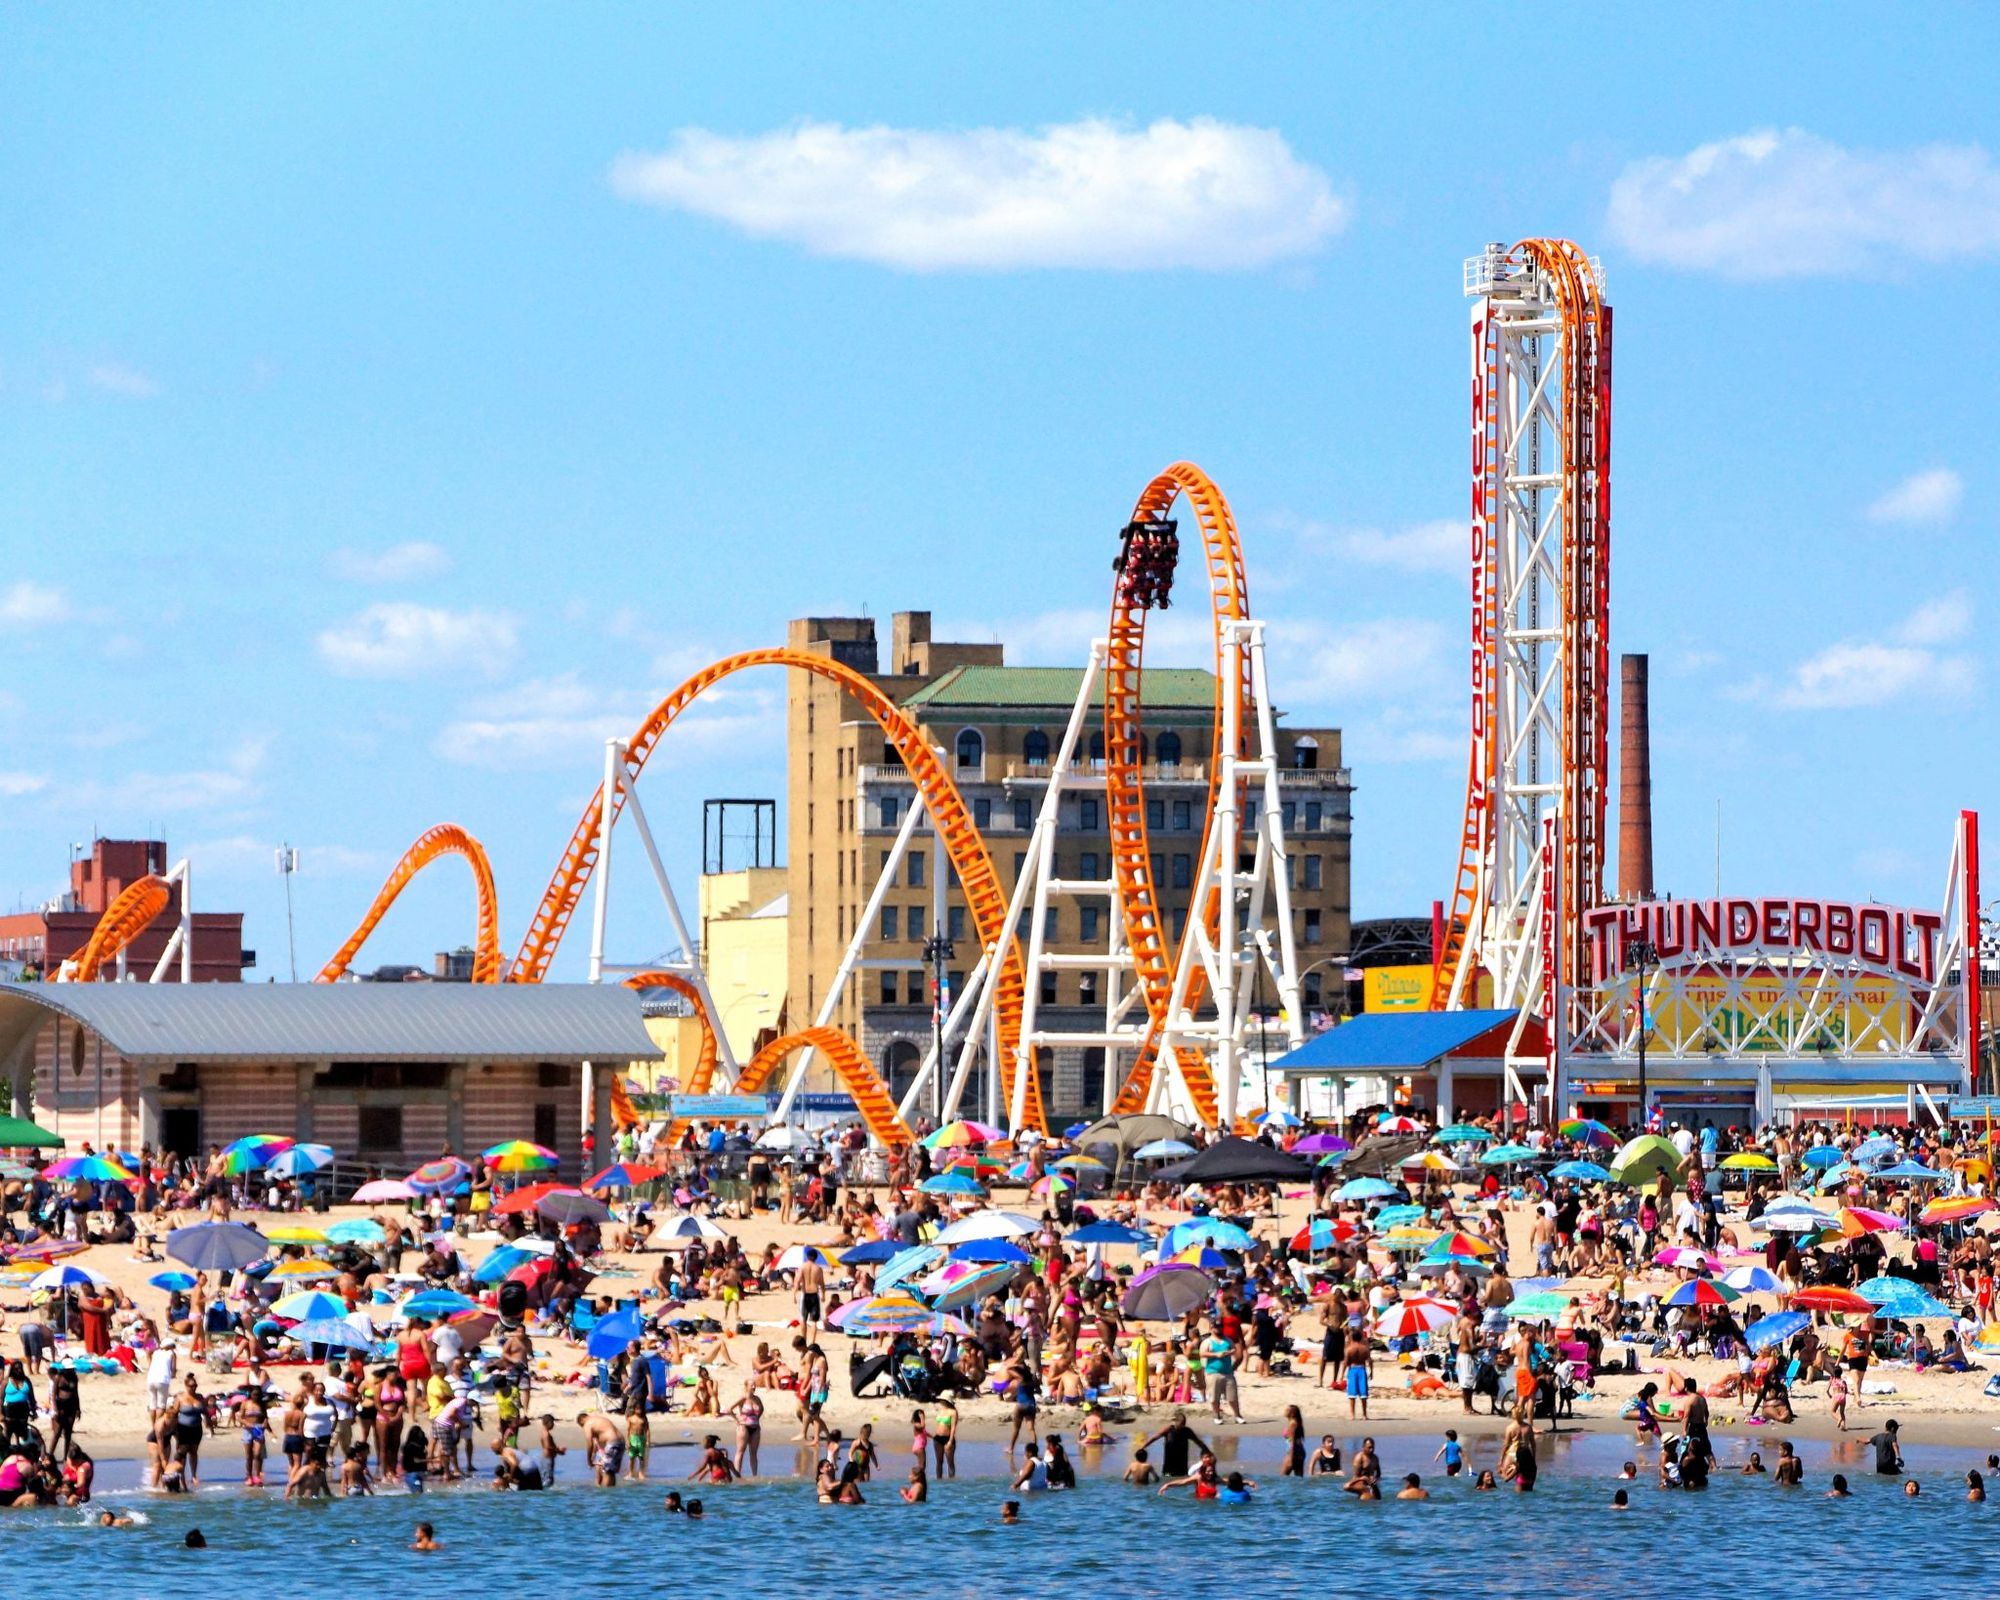 Tomorrow: 500 Coney Island Summer Jobs For Locals